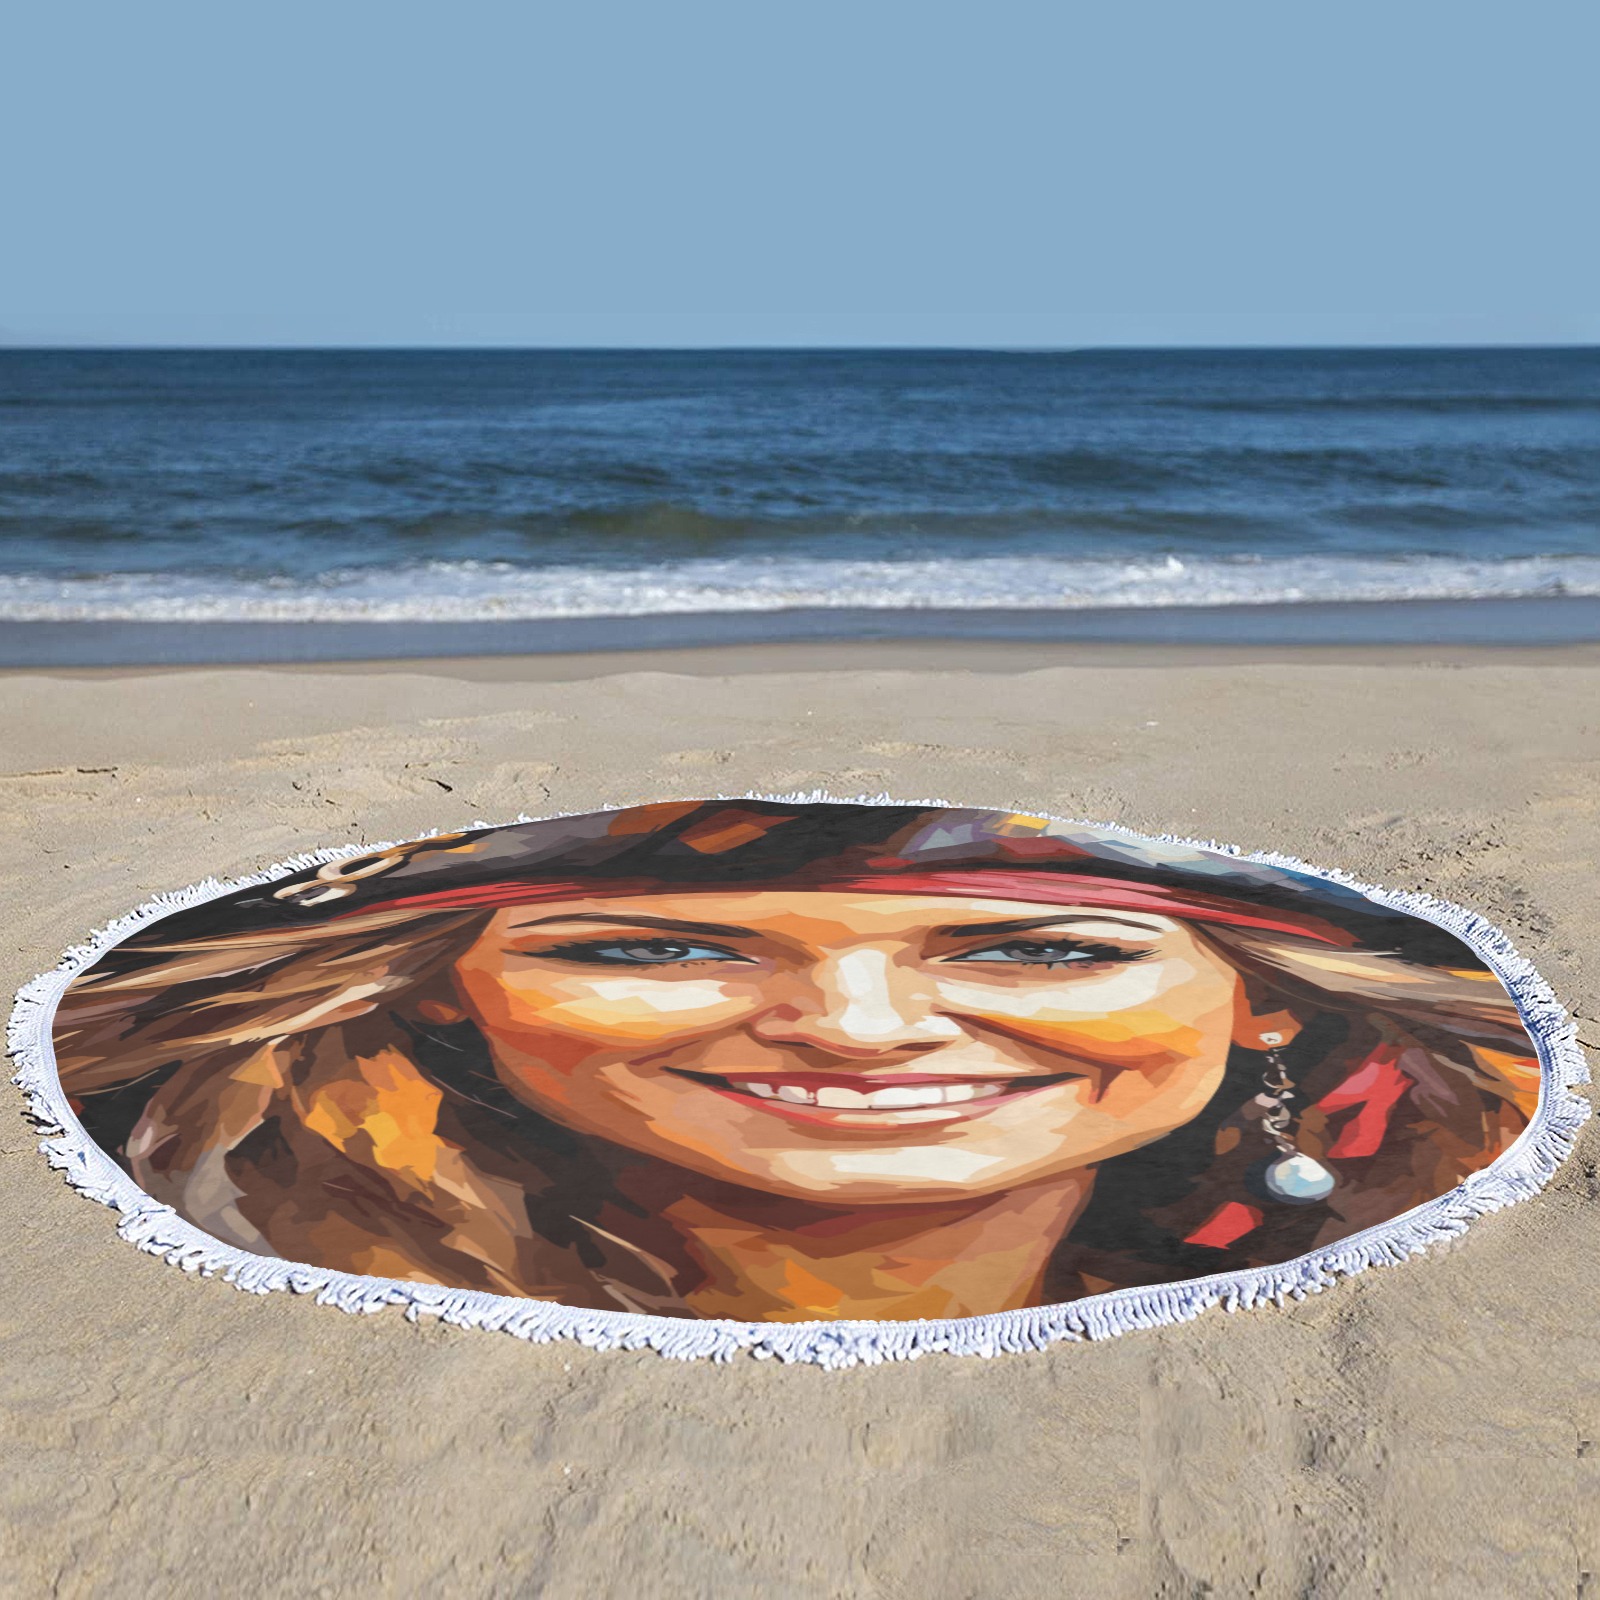 Charming adorable pirate lady at peaceful sunset. Circular Beach Shawl Towel 59"x 59"